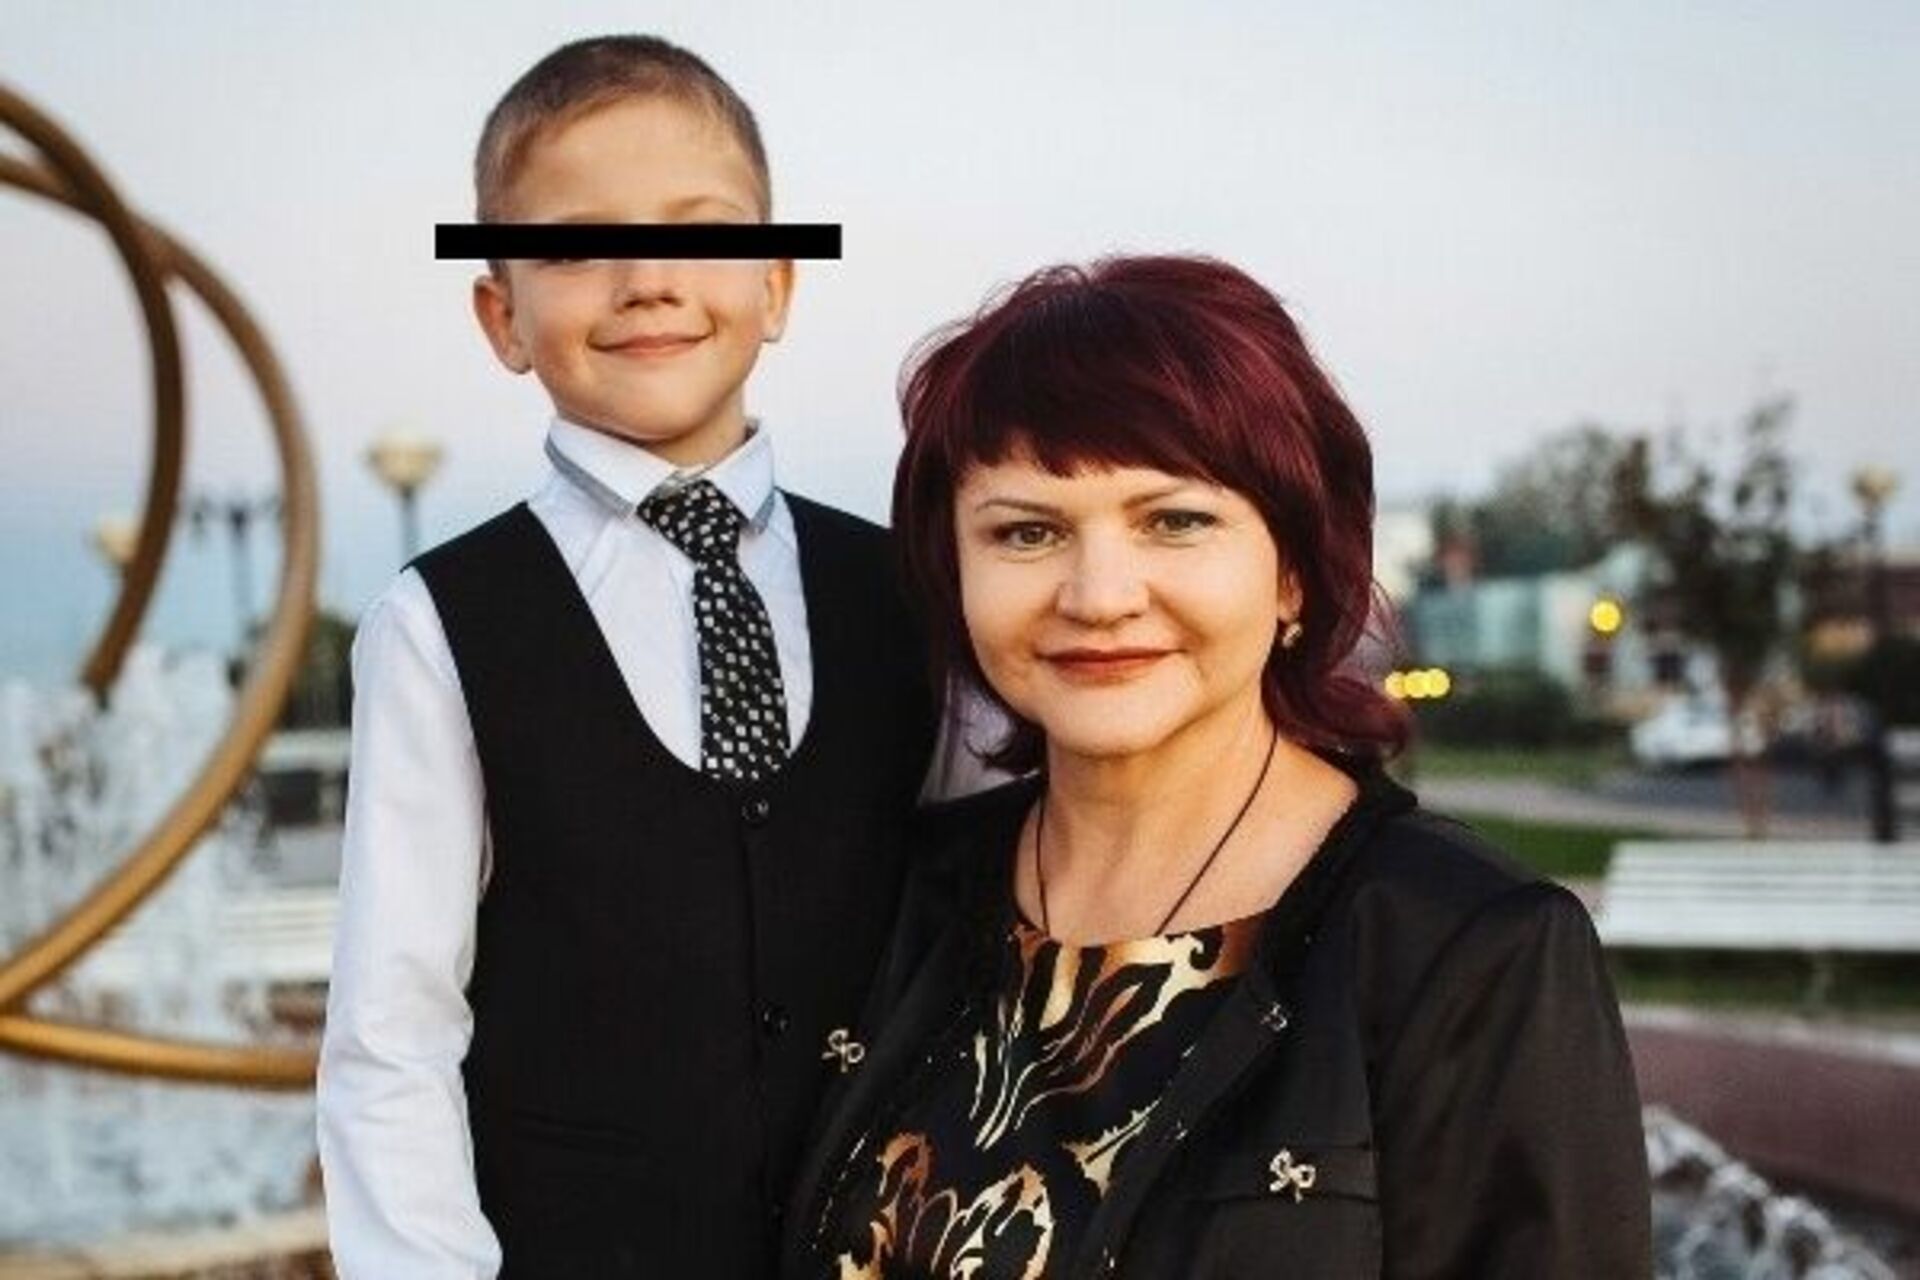 Мама и 12 летний сын. Саша Парахняков Астрахань. Астрахань мать замуровала сына в бетон. Замуровала сына в бетон Астрахань.